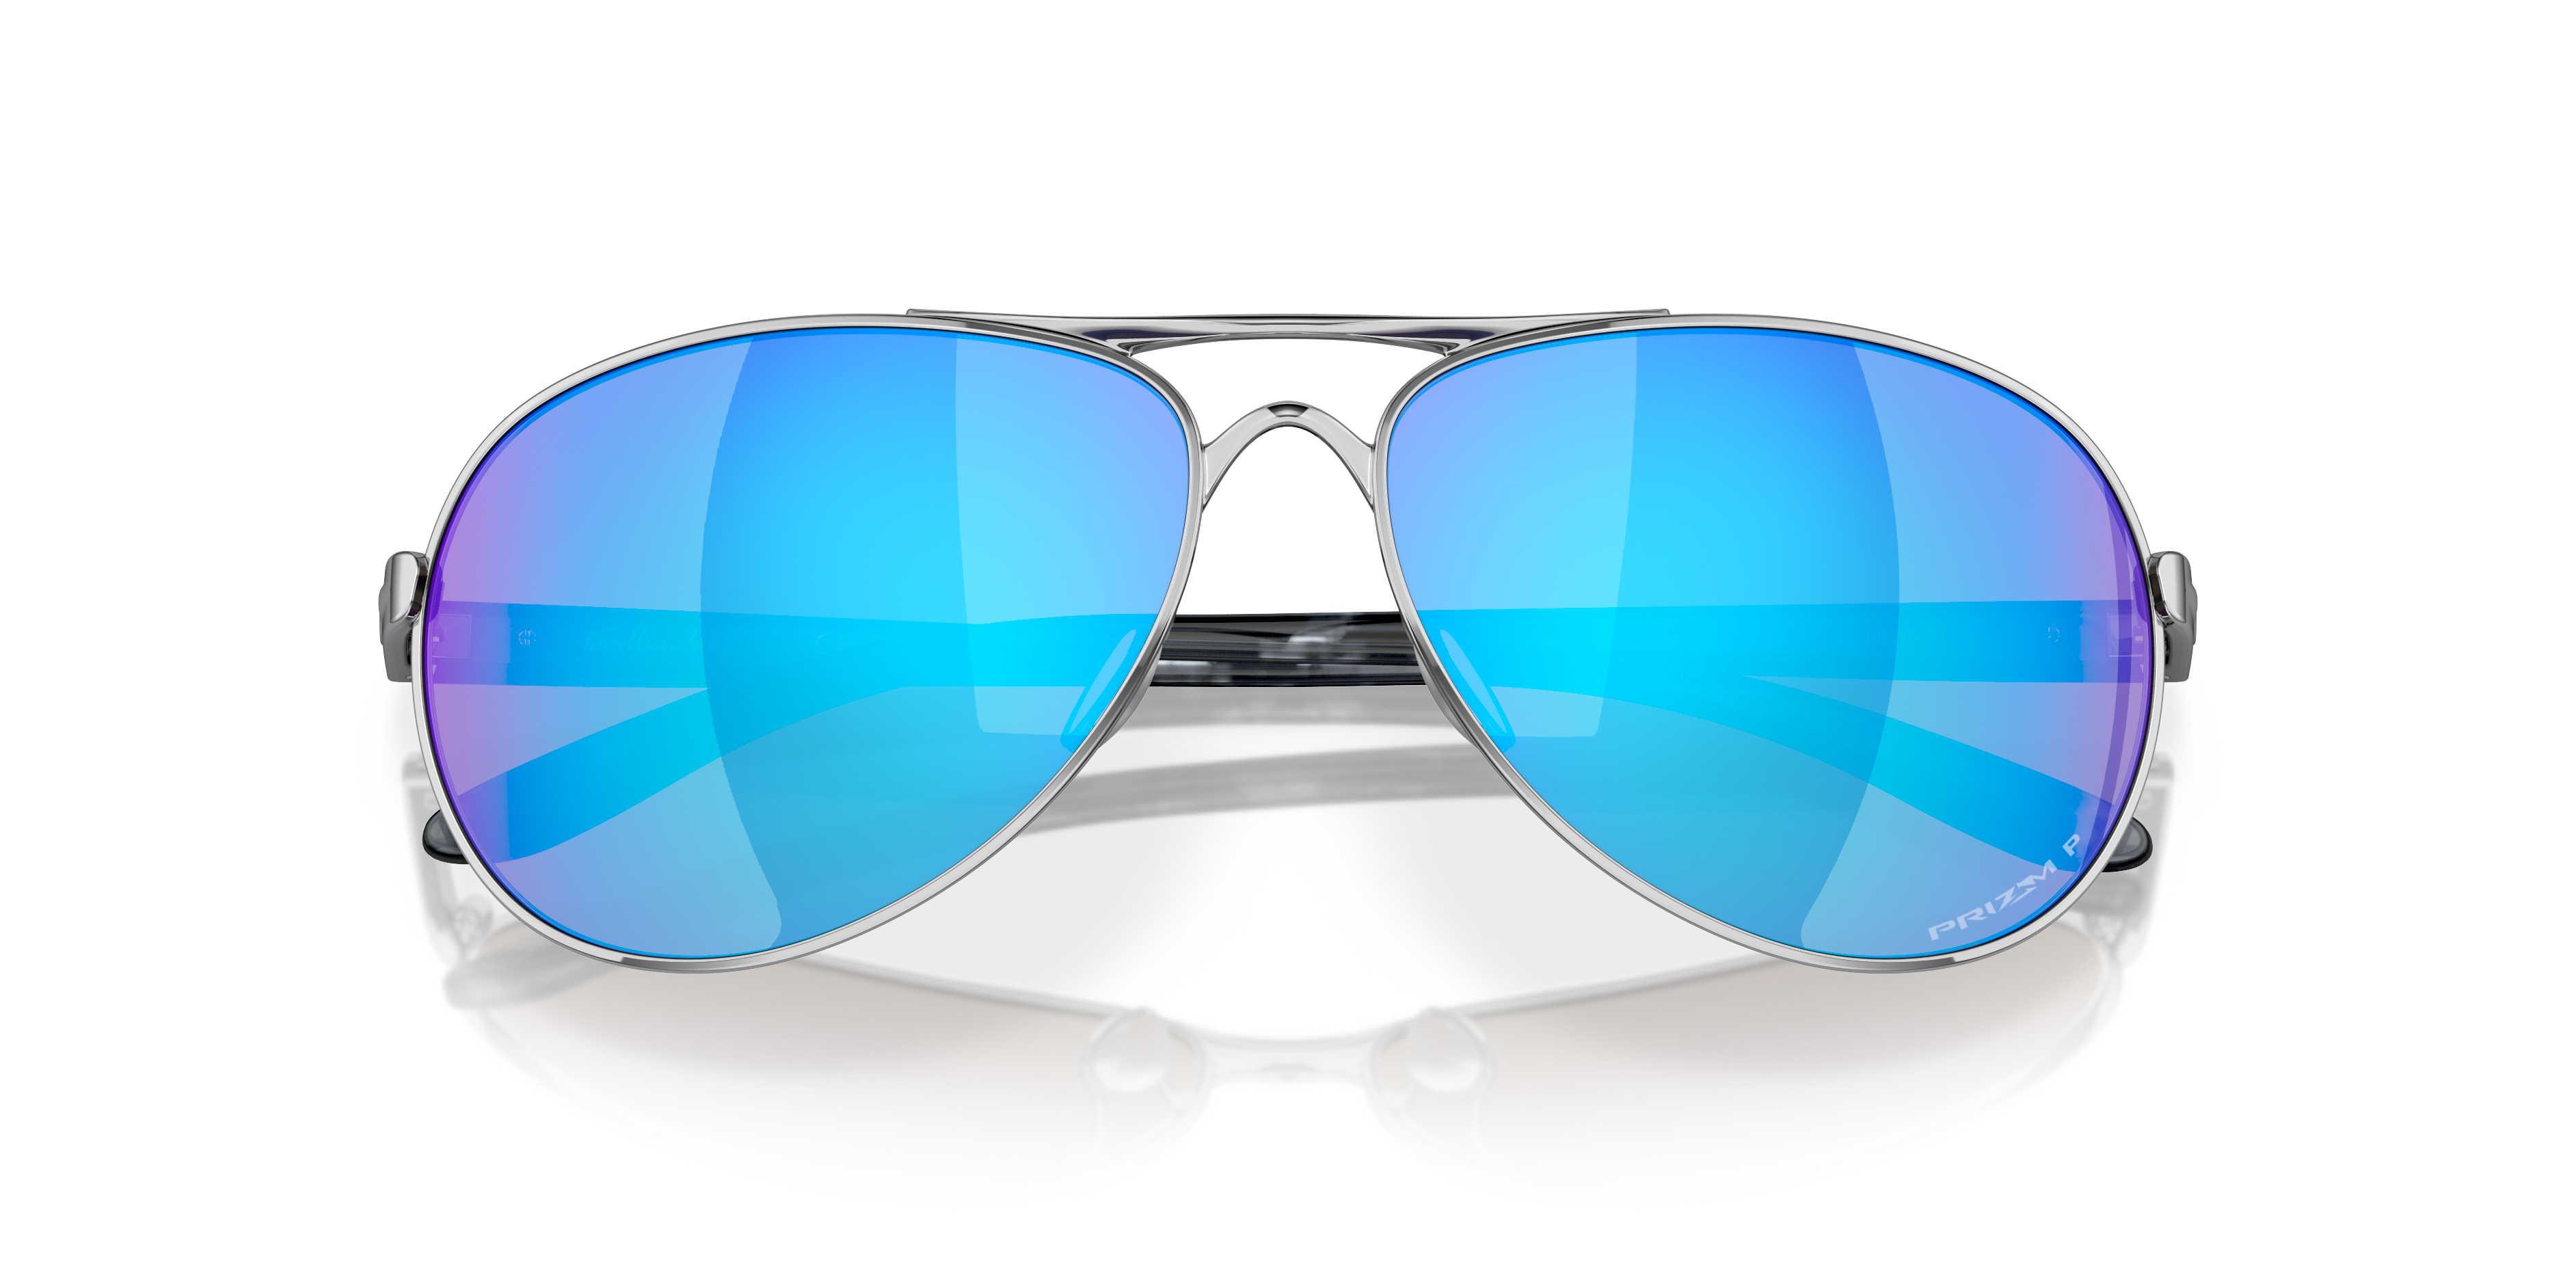 oakley blue aviator sunglasses